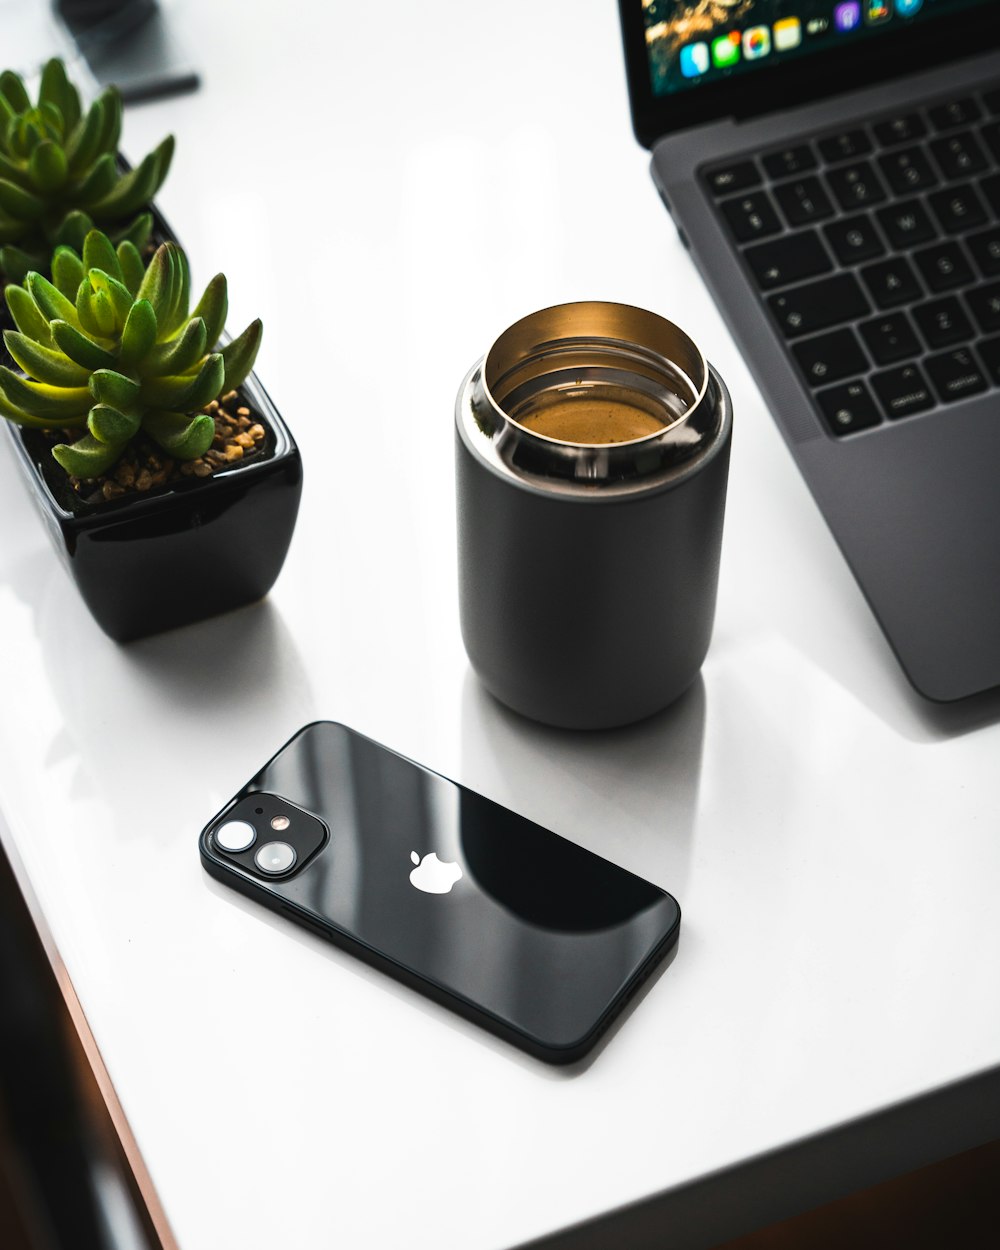 silver iphone 6 beside black ceramic mug on white table